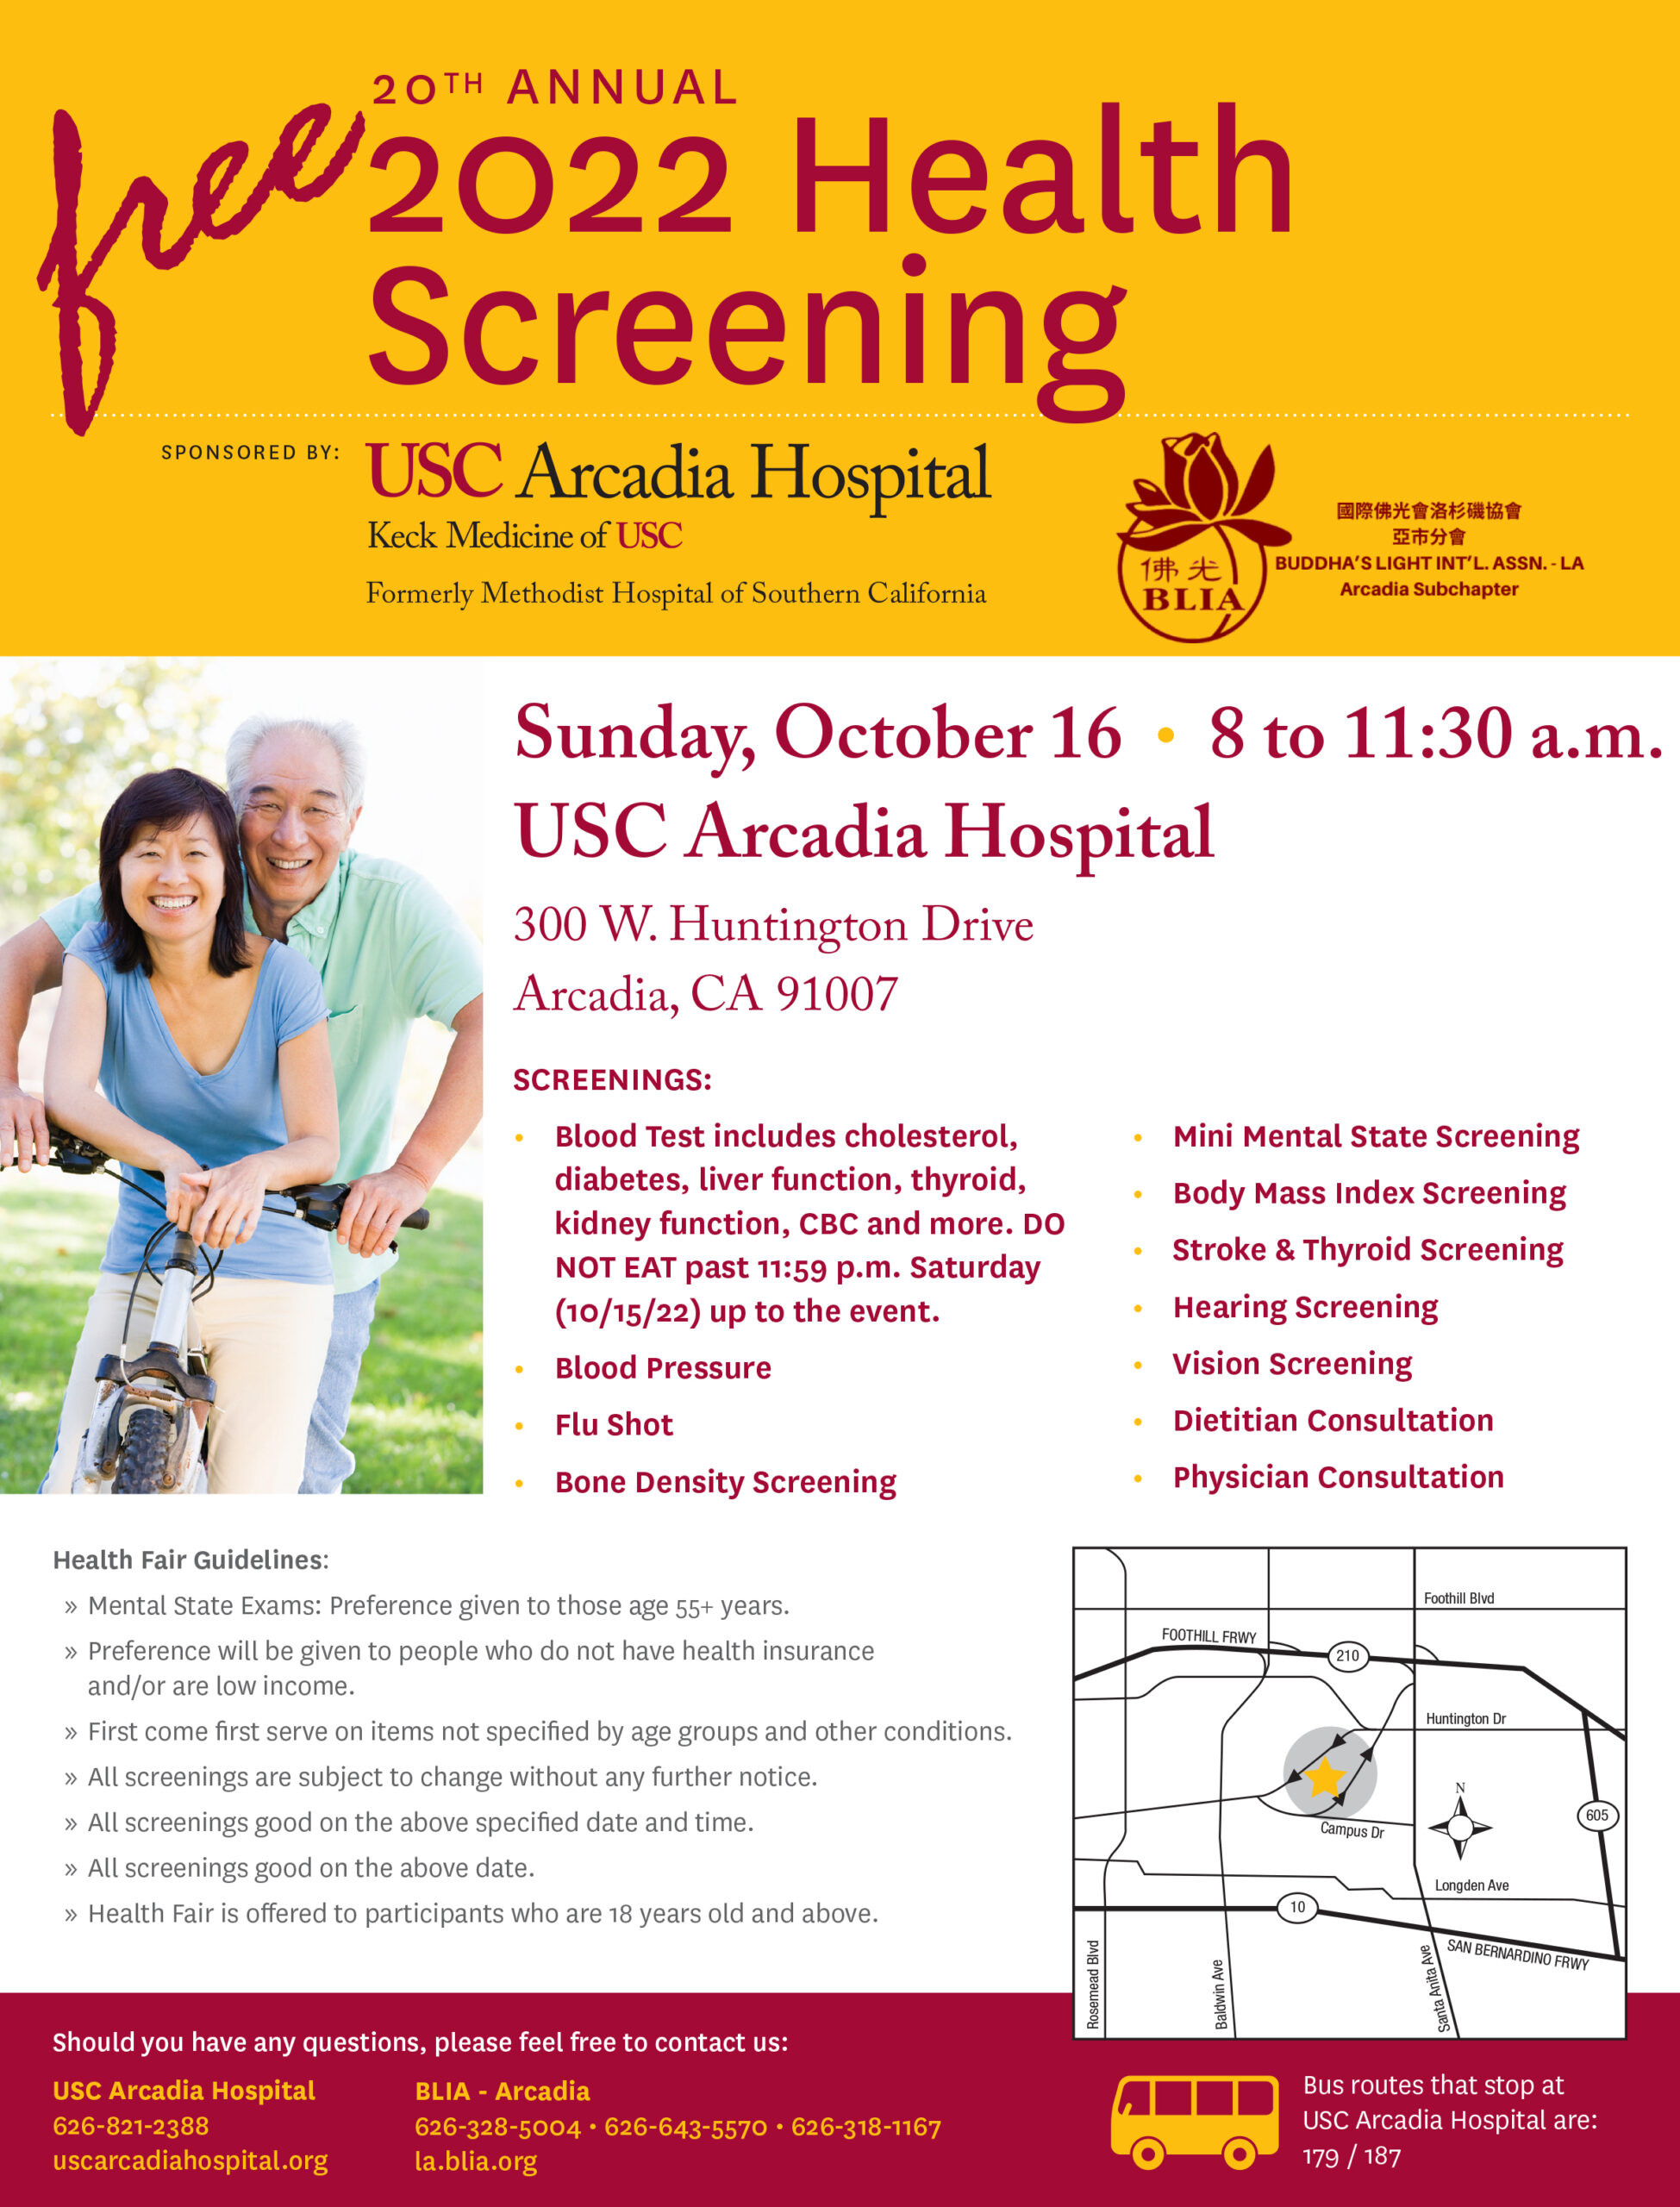 USC Arcadia Hospital free 2022 health screening